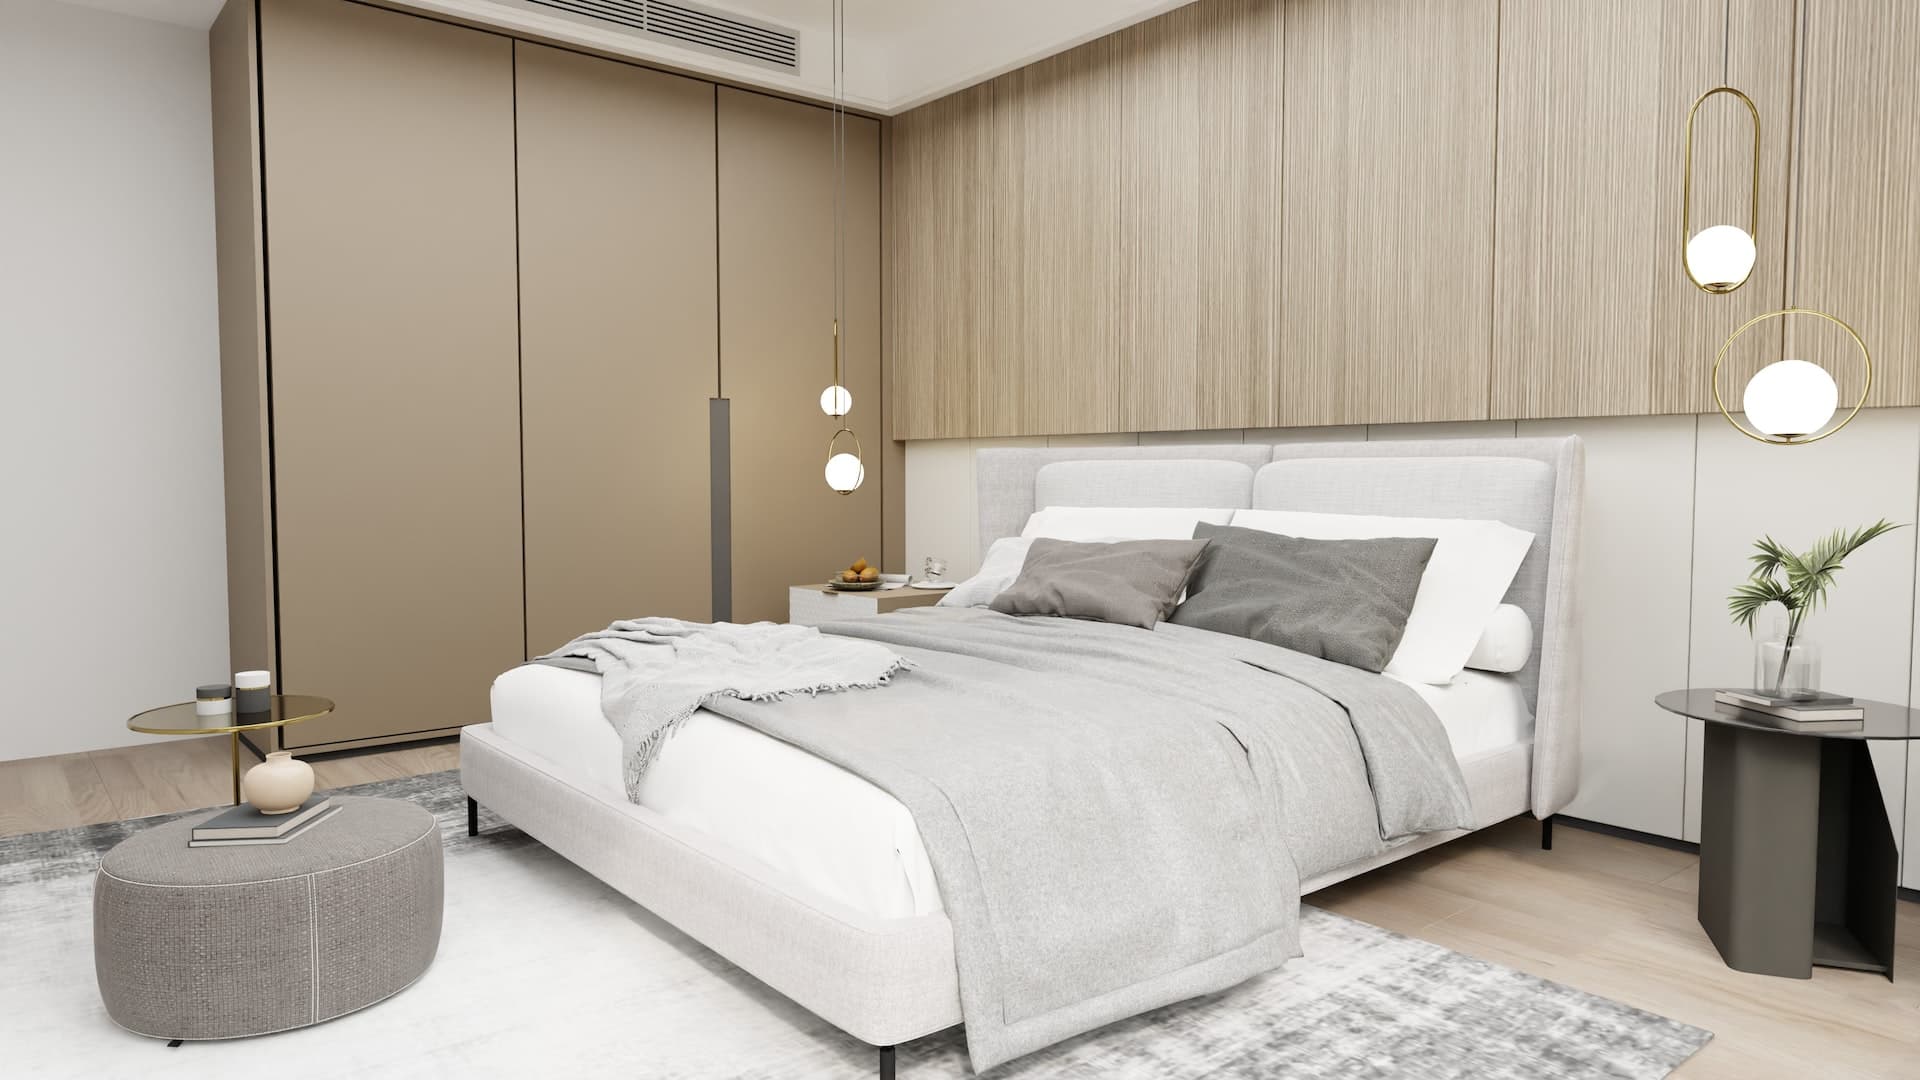 3D Furniture Rendering of Bedroom Wardroom